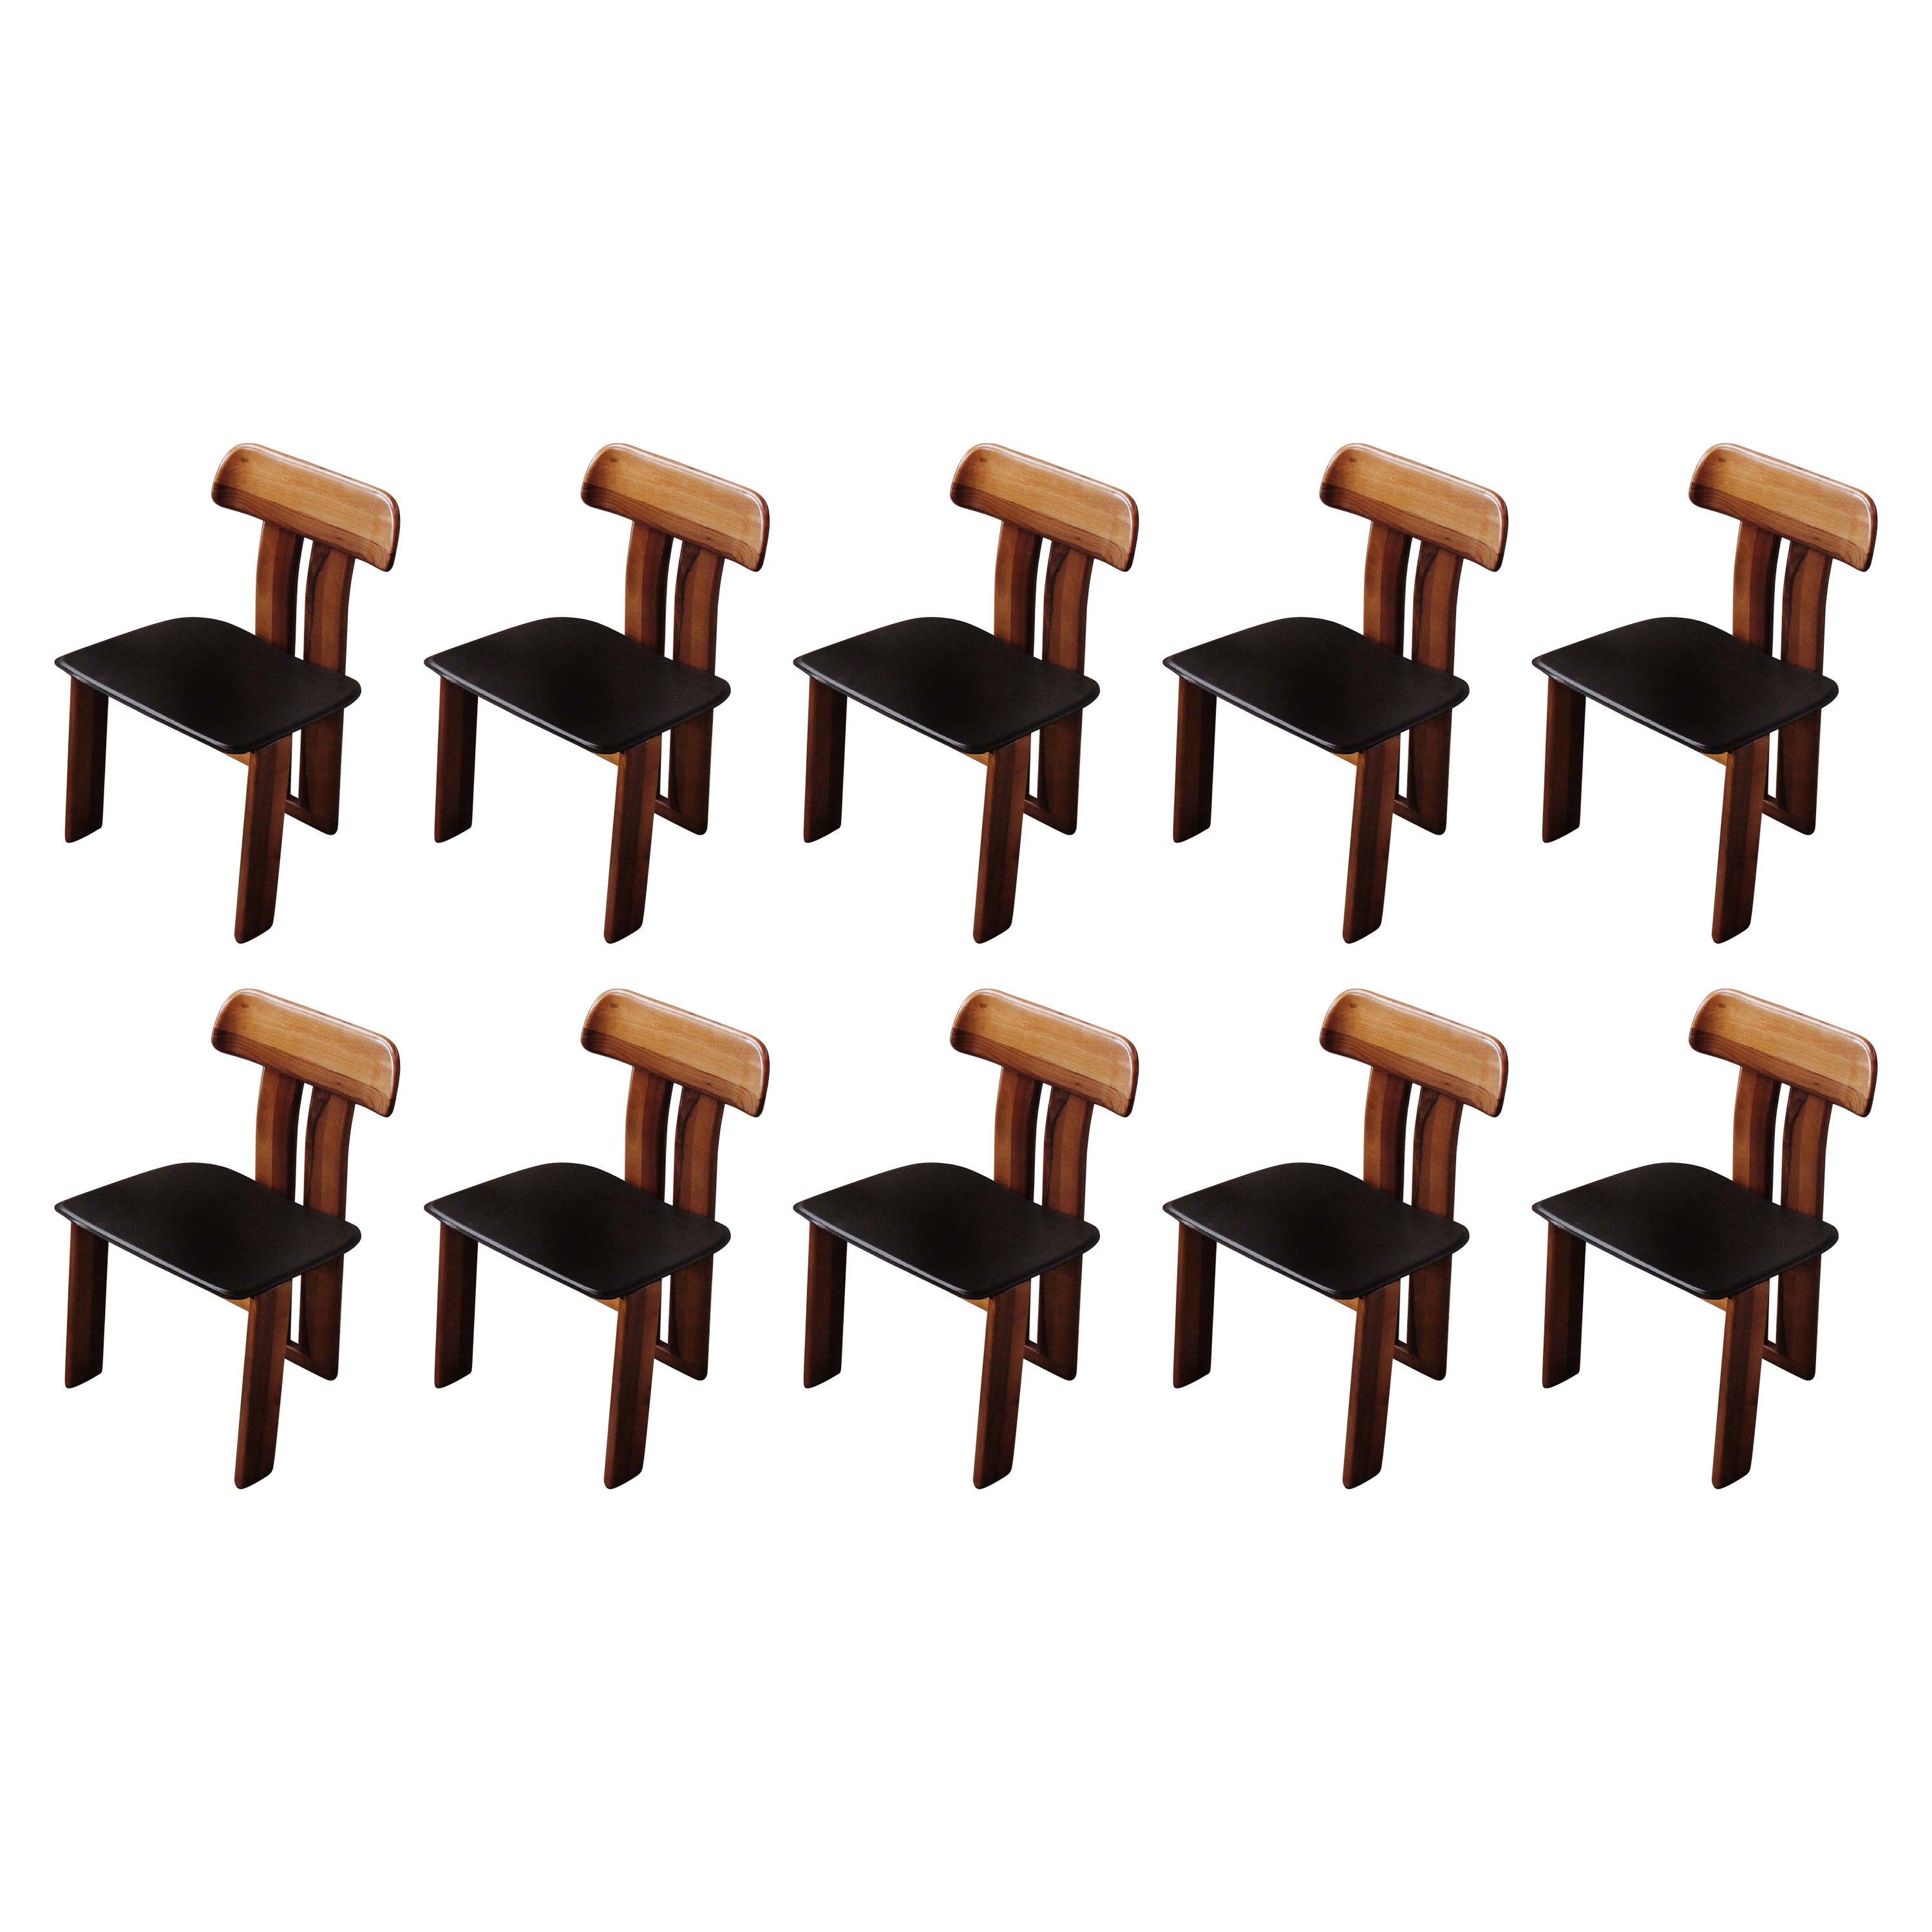 Mario Marenco "Sapporo" Chairs for Mobil Girgi, 1970, Set of 10